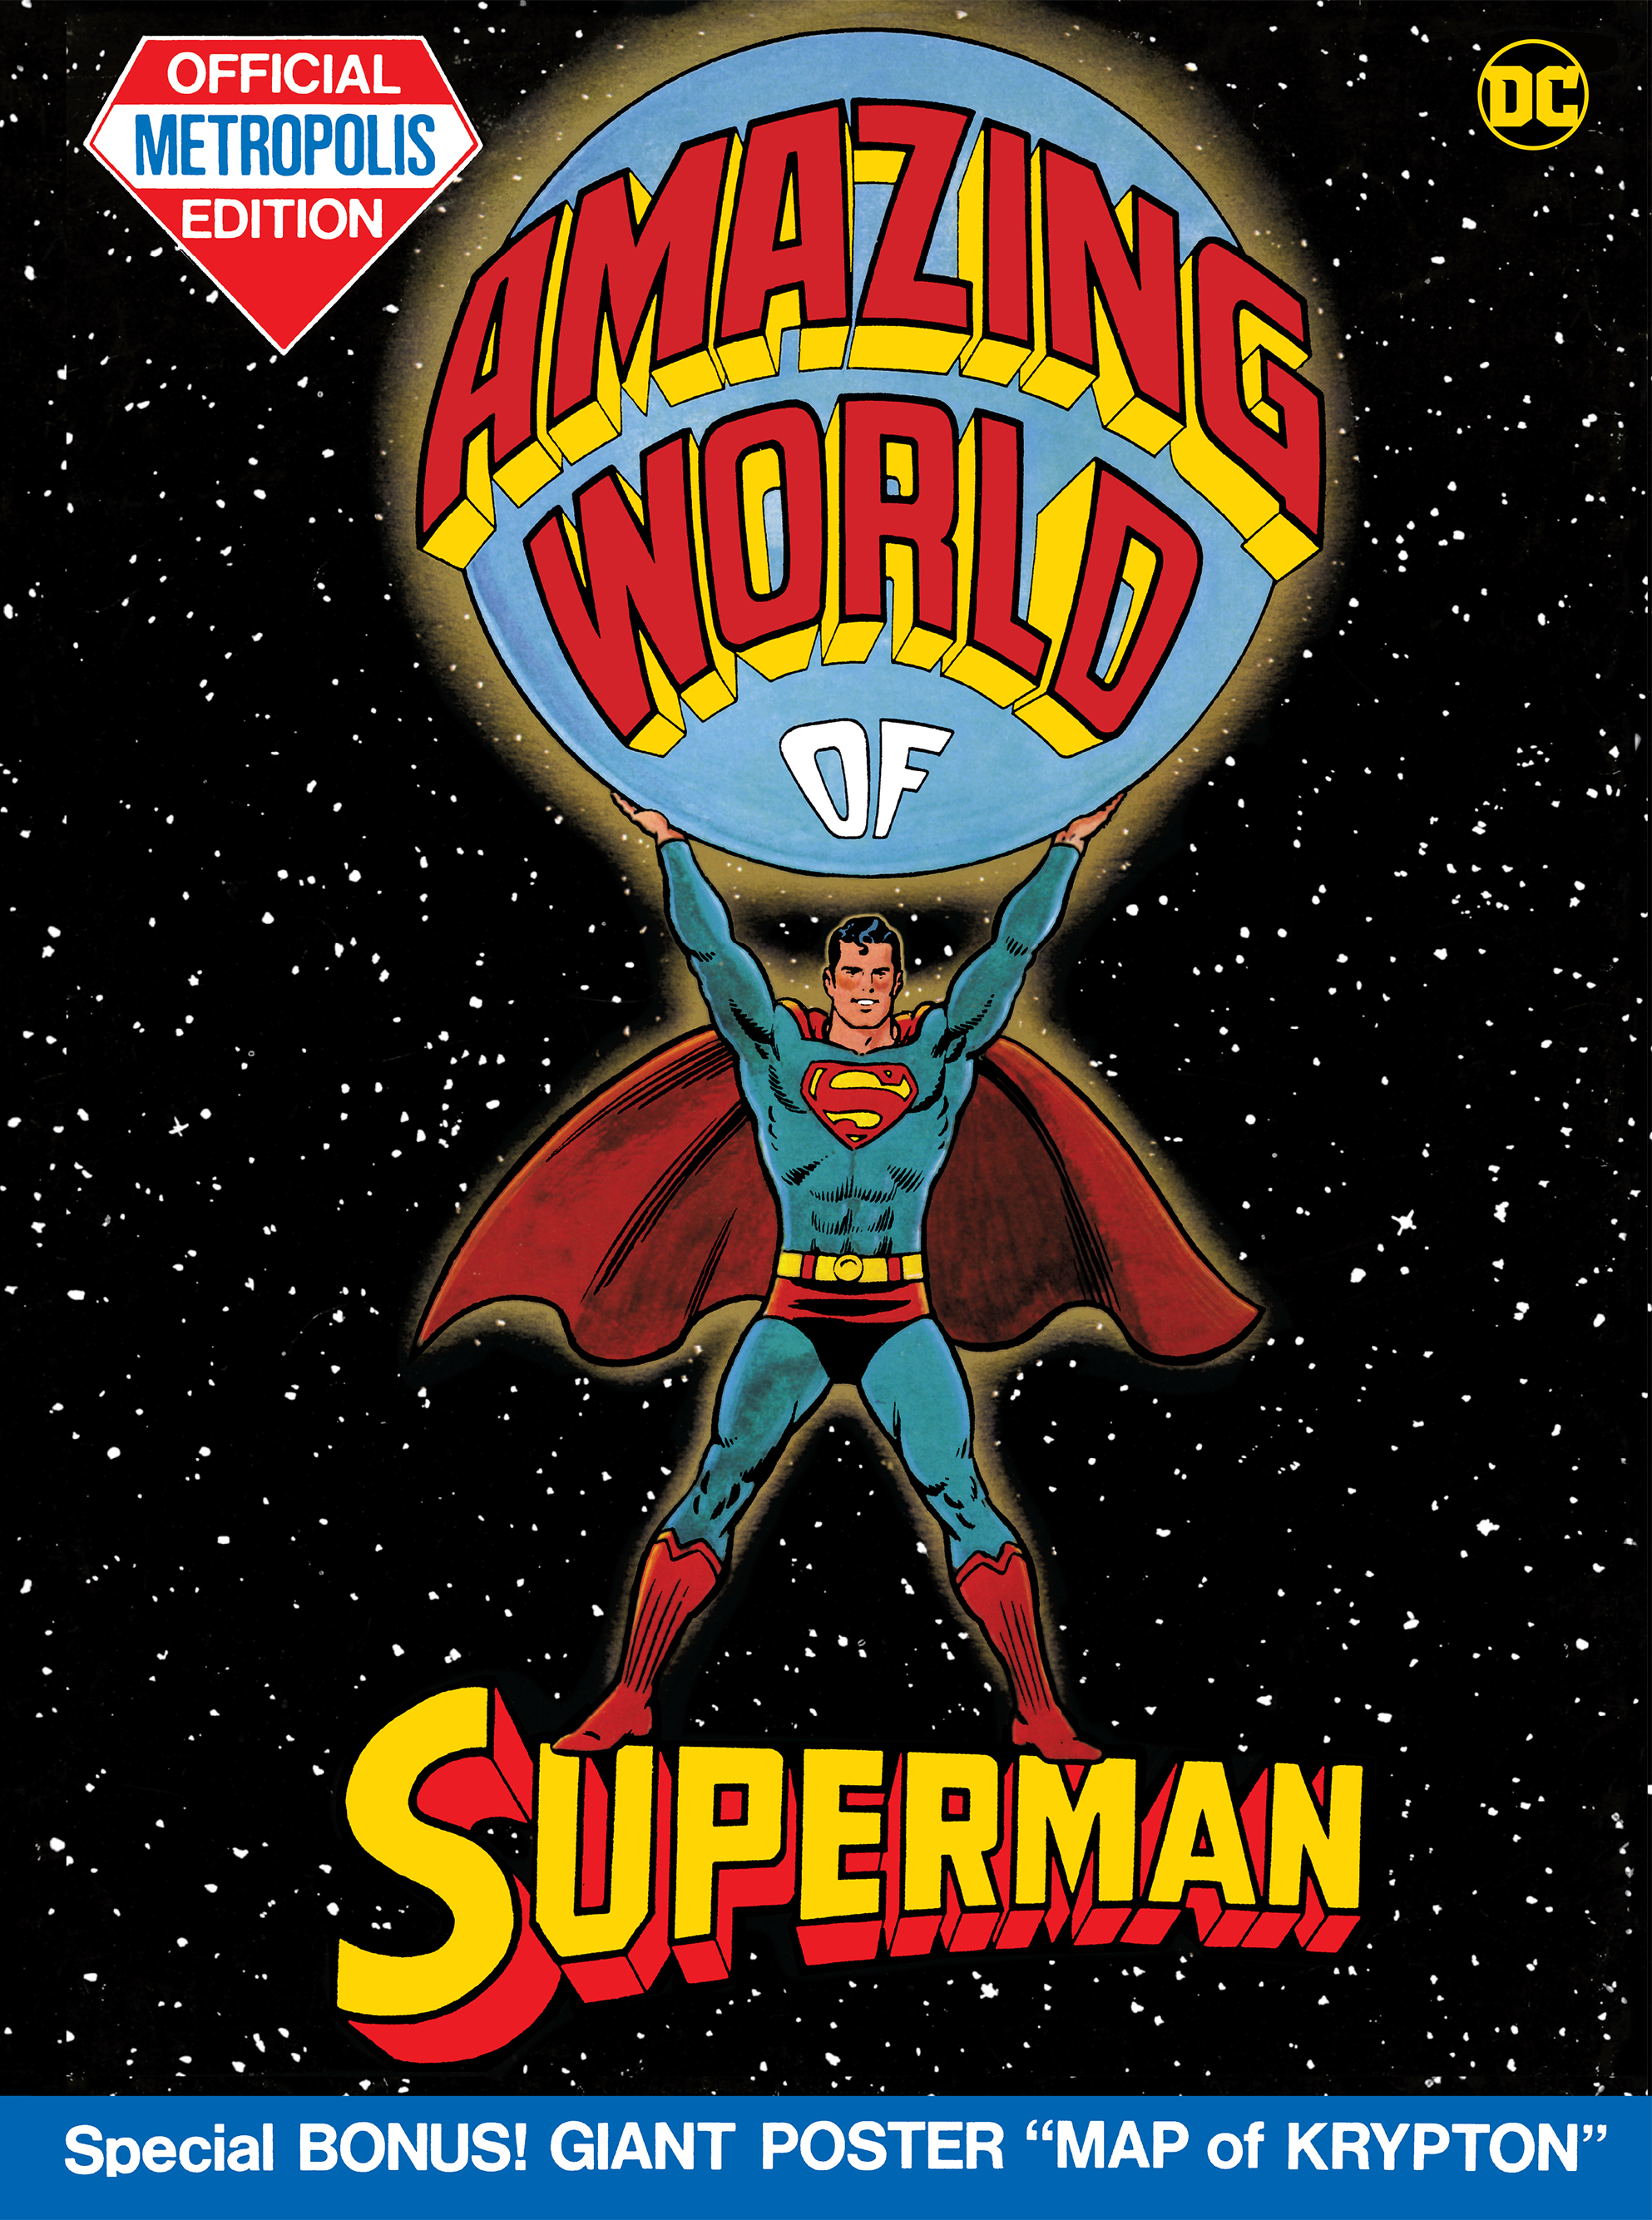 Amazing World of Superman (Tabloid Edition) Hardcover